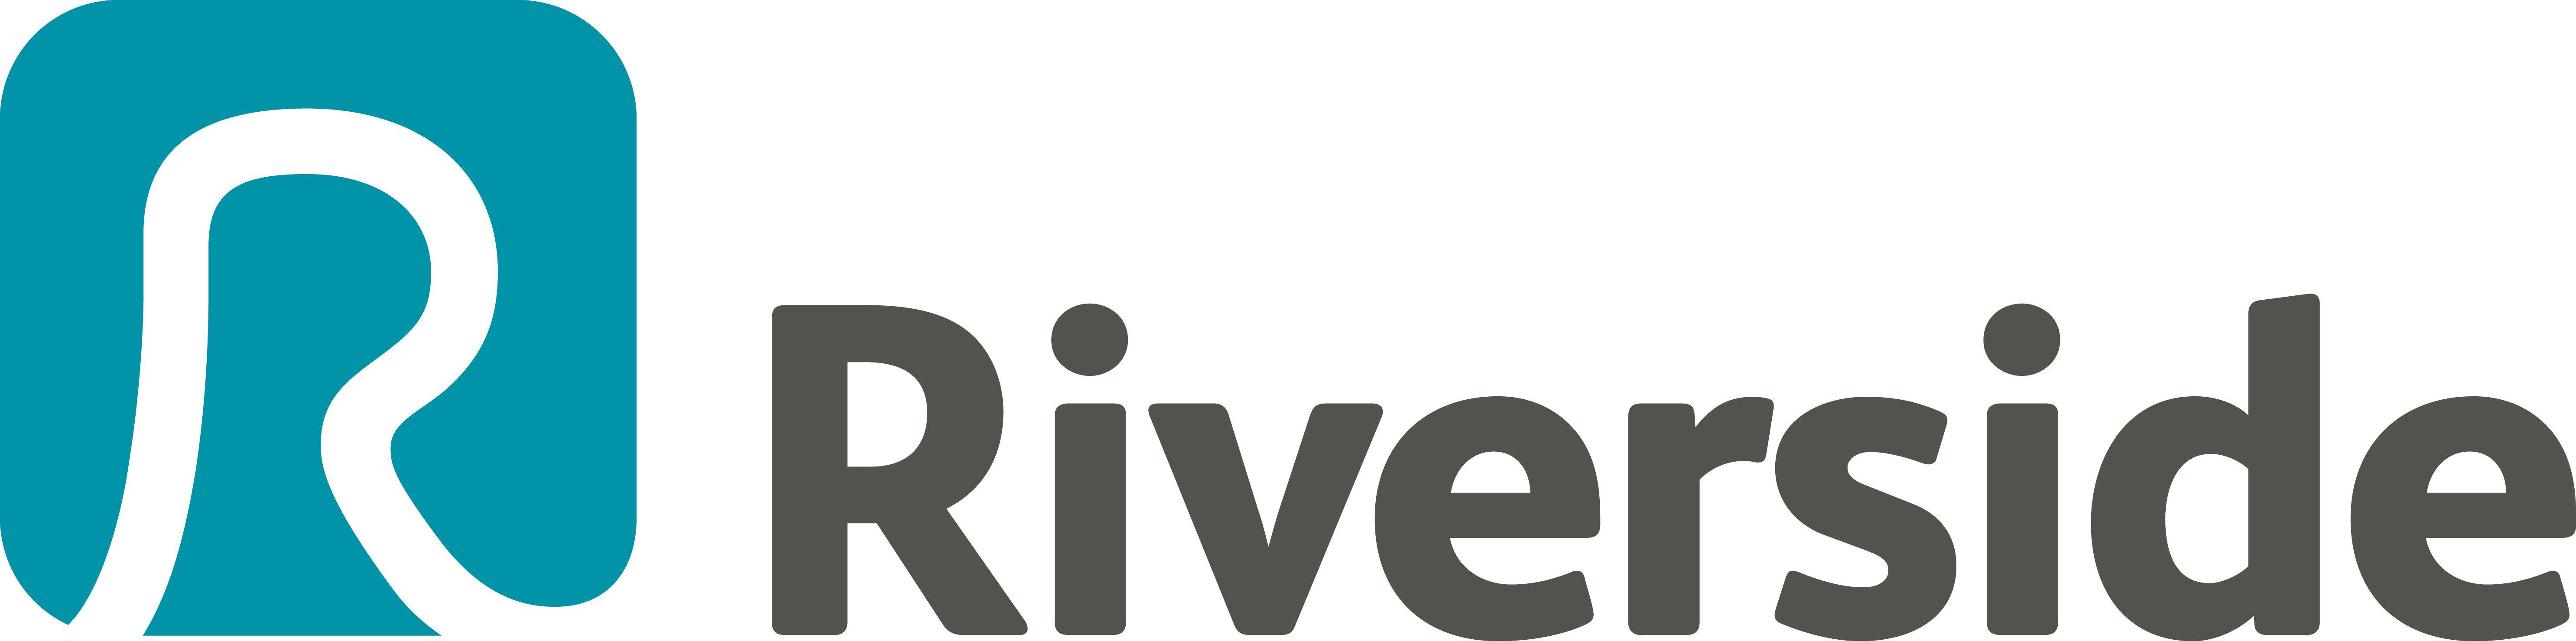 Riverside Logo - Riverside Logo.jpg | Hull City Council